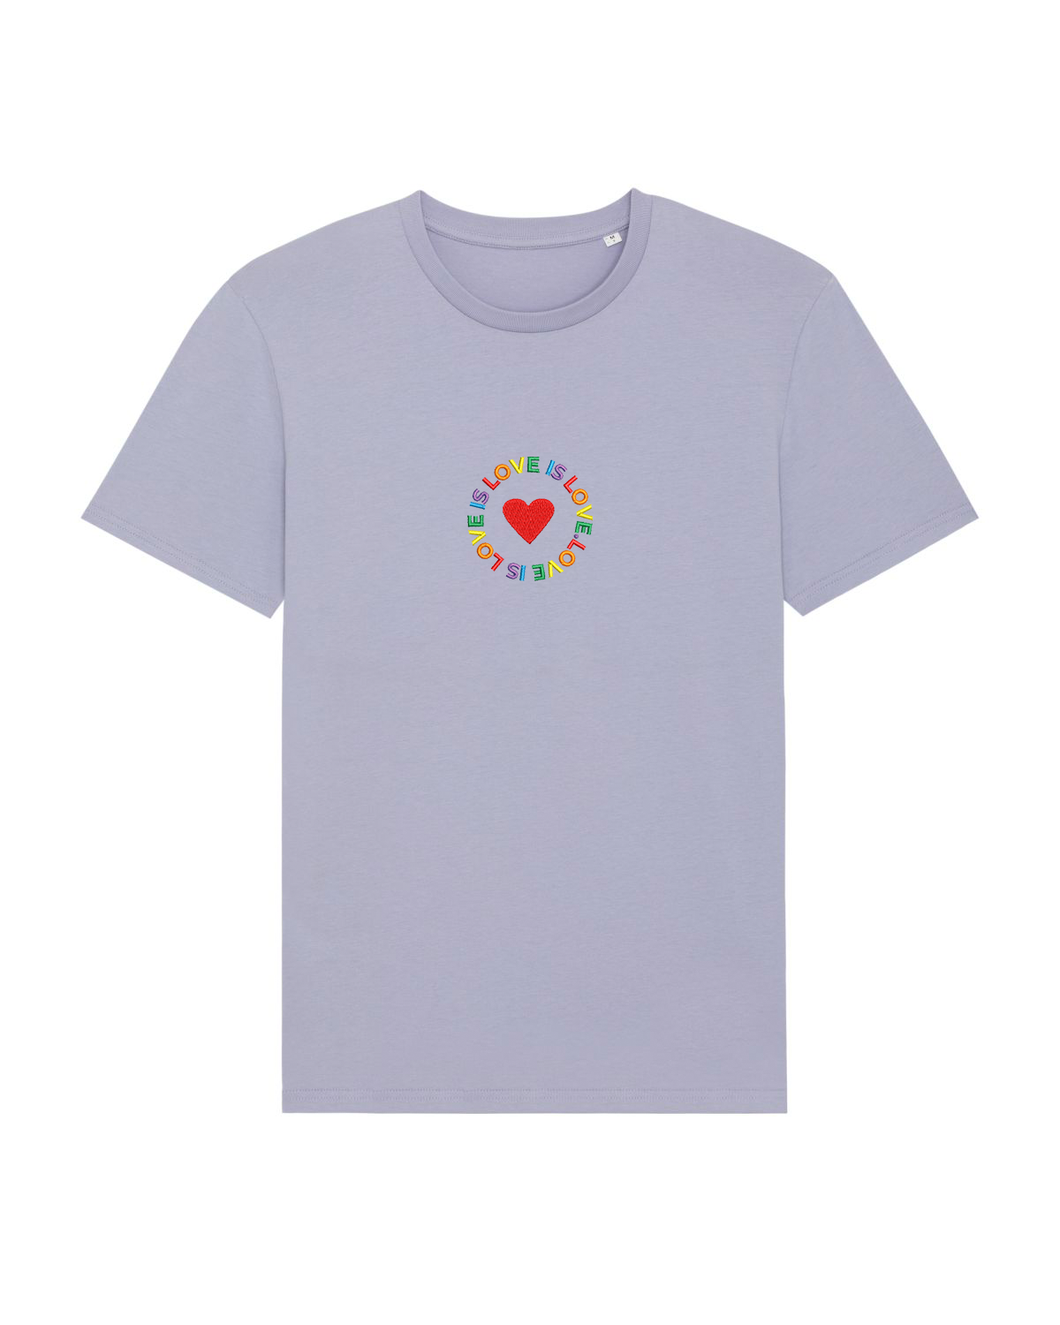 LOVEISLOVE❤️ - organic cotton embroidered unisex T-shirt